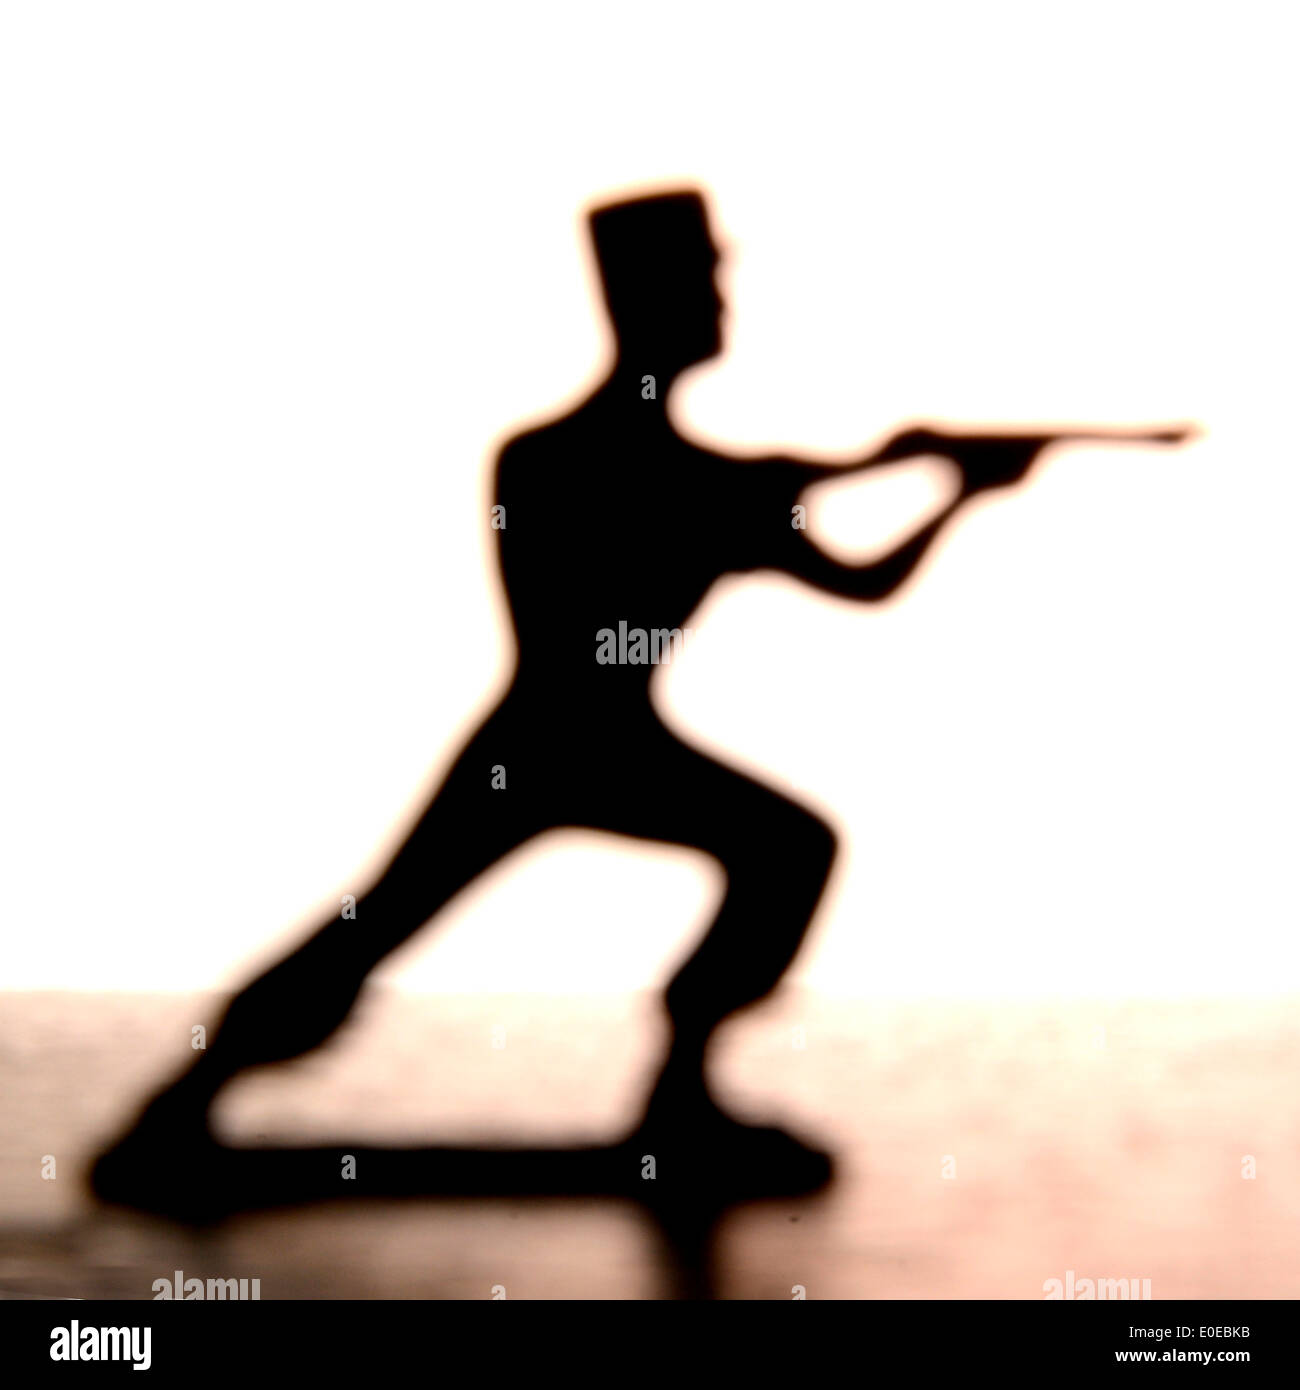 Soldier figurine firing a gun Stock Photo